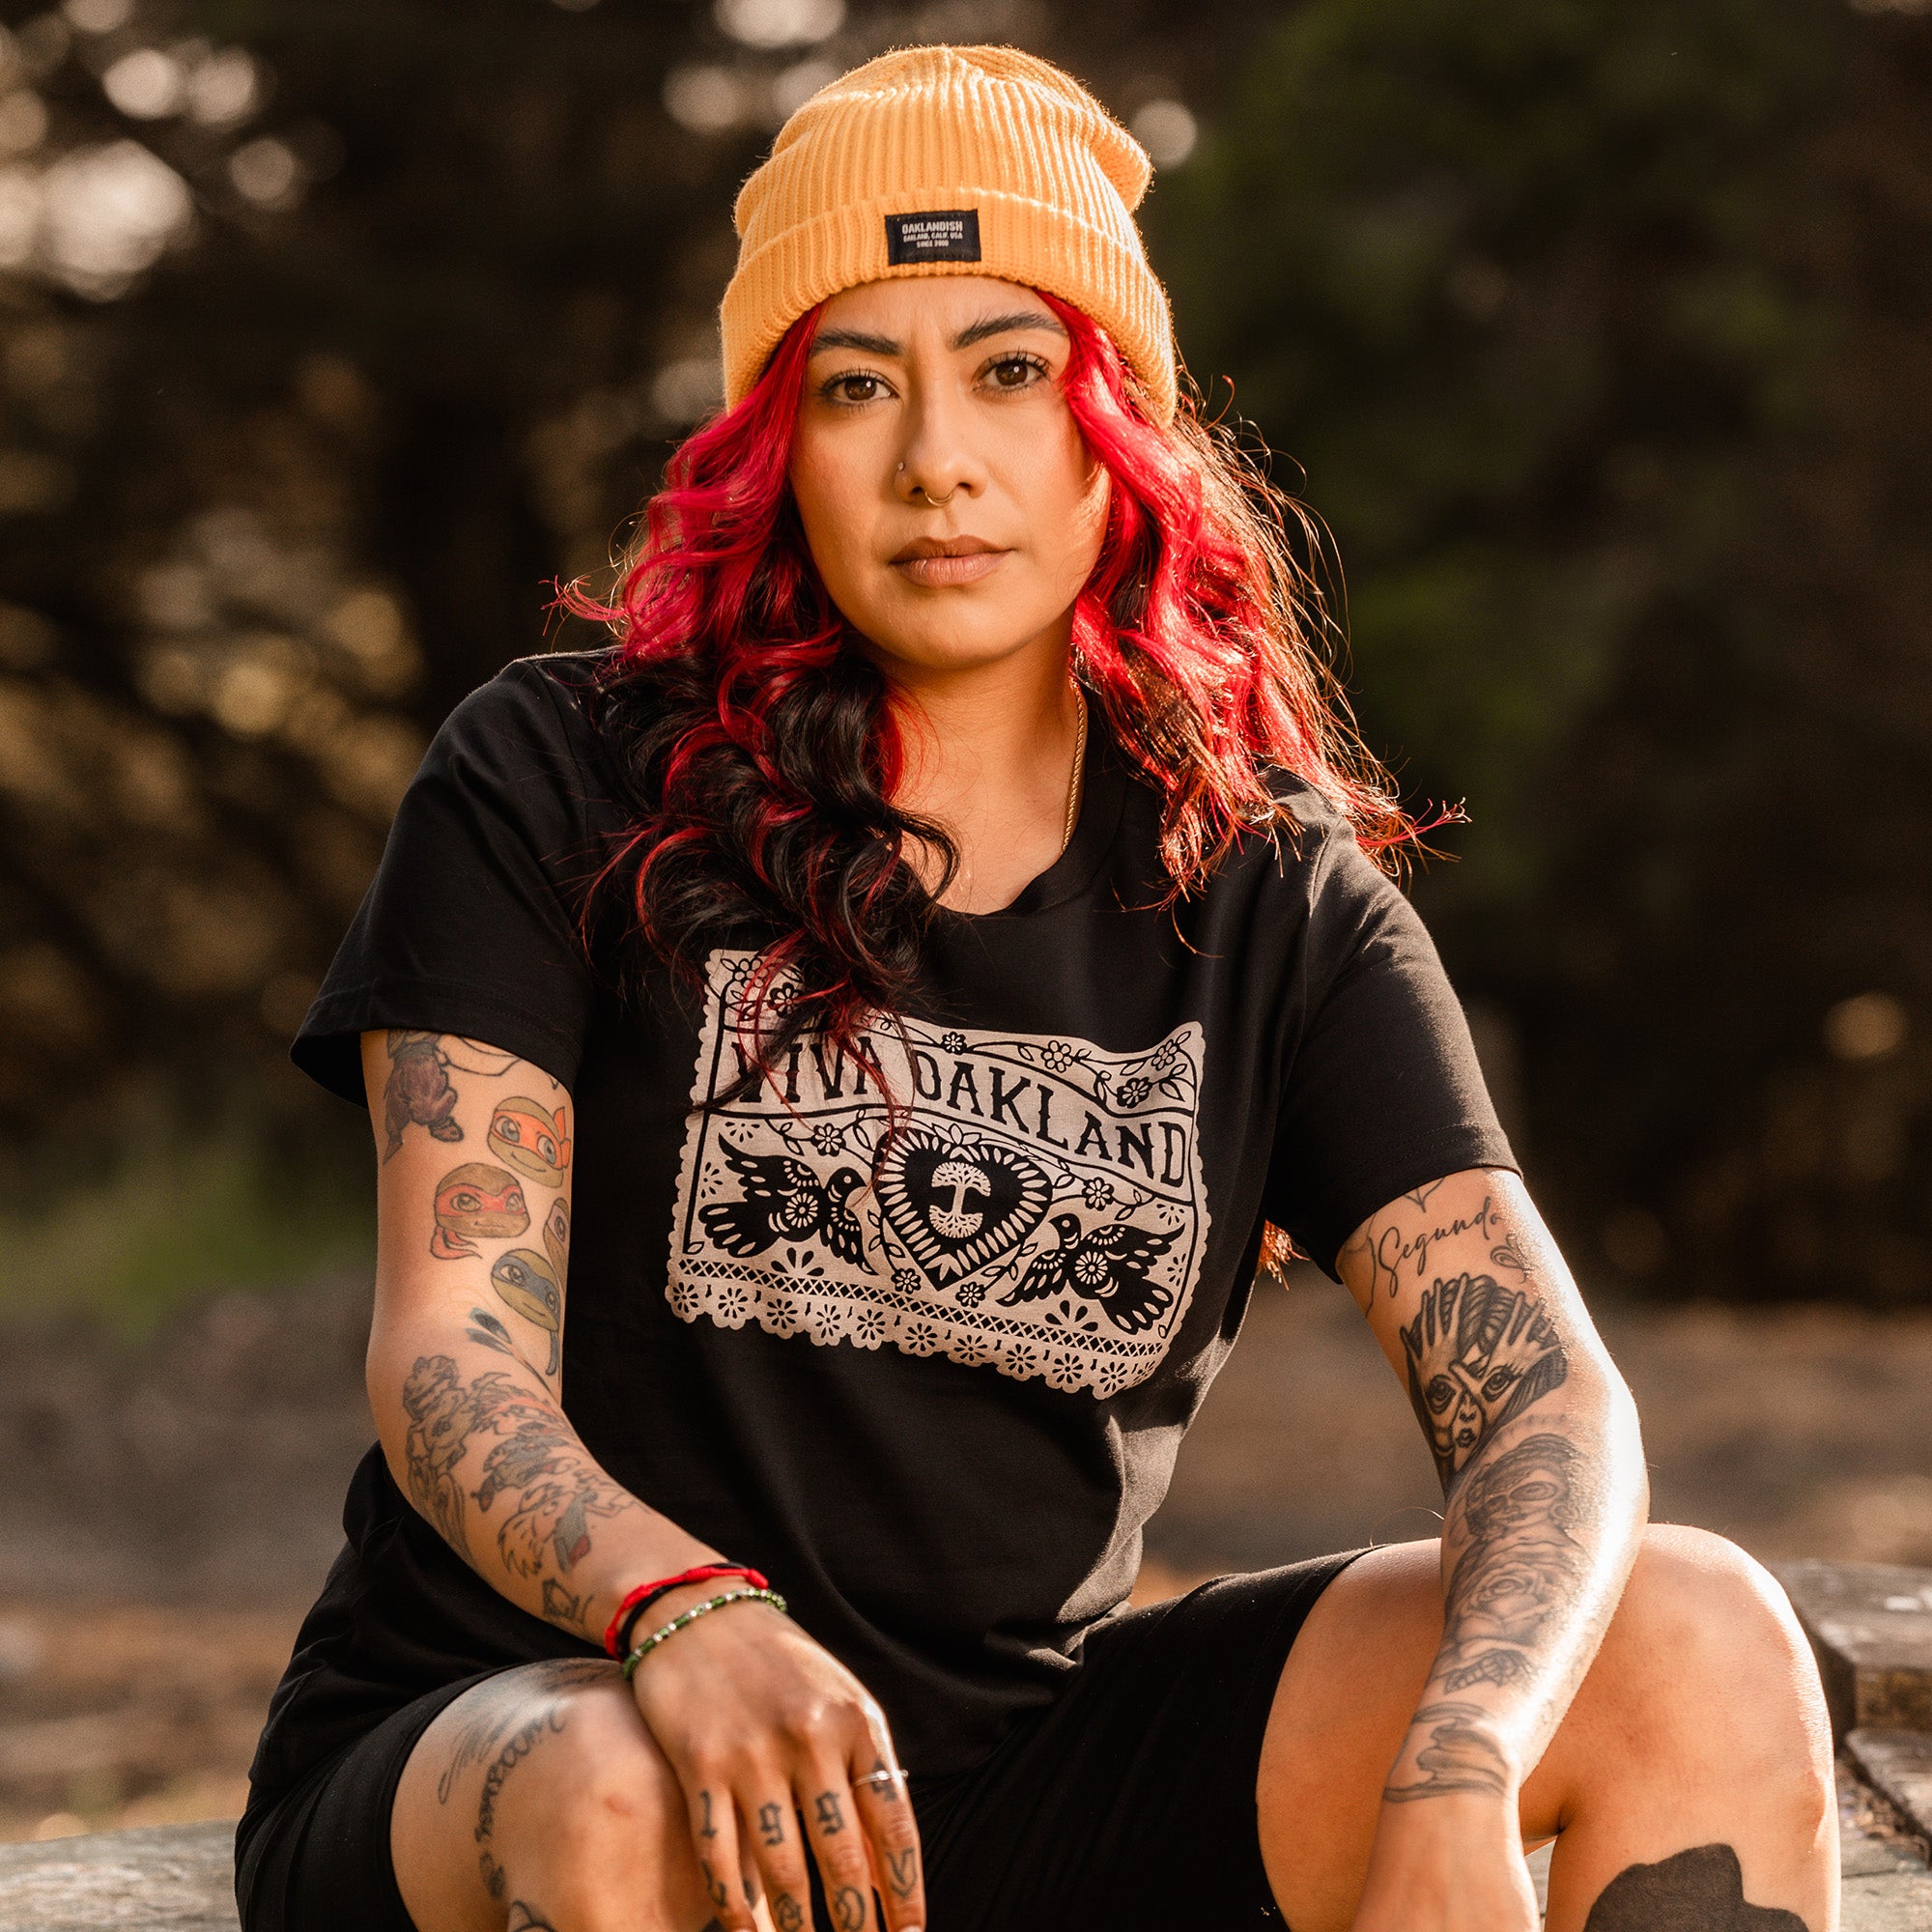 Woman wearing Viva Oakland Black t-shirt outdoors